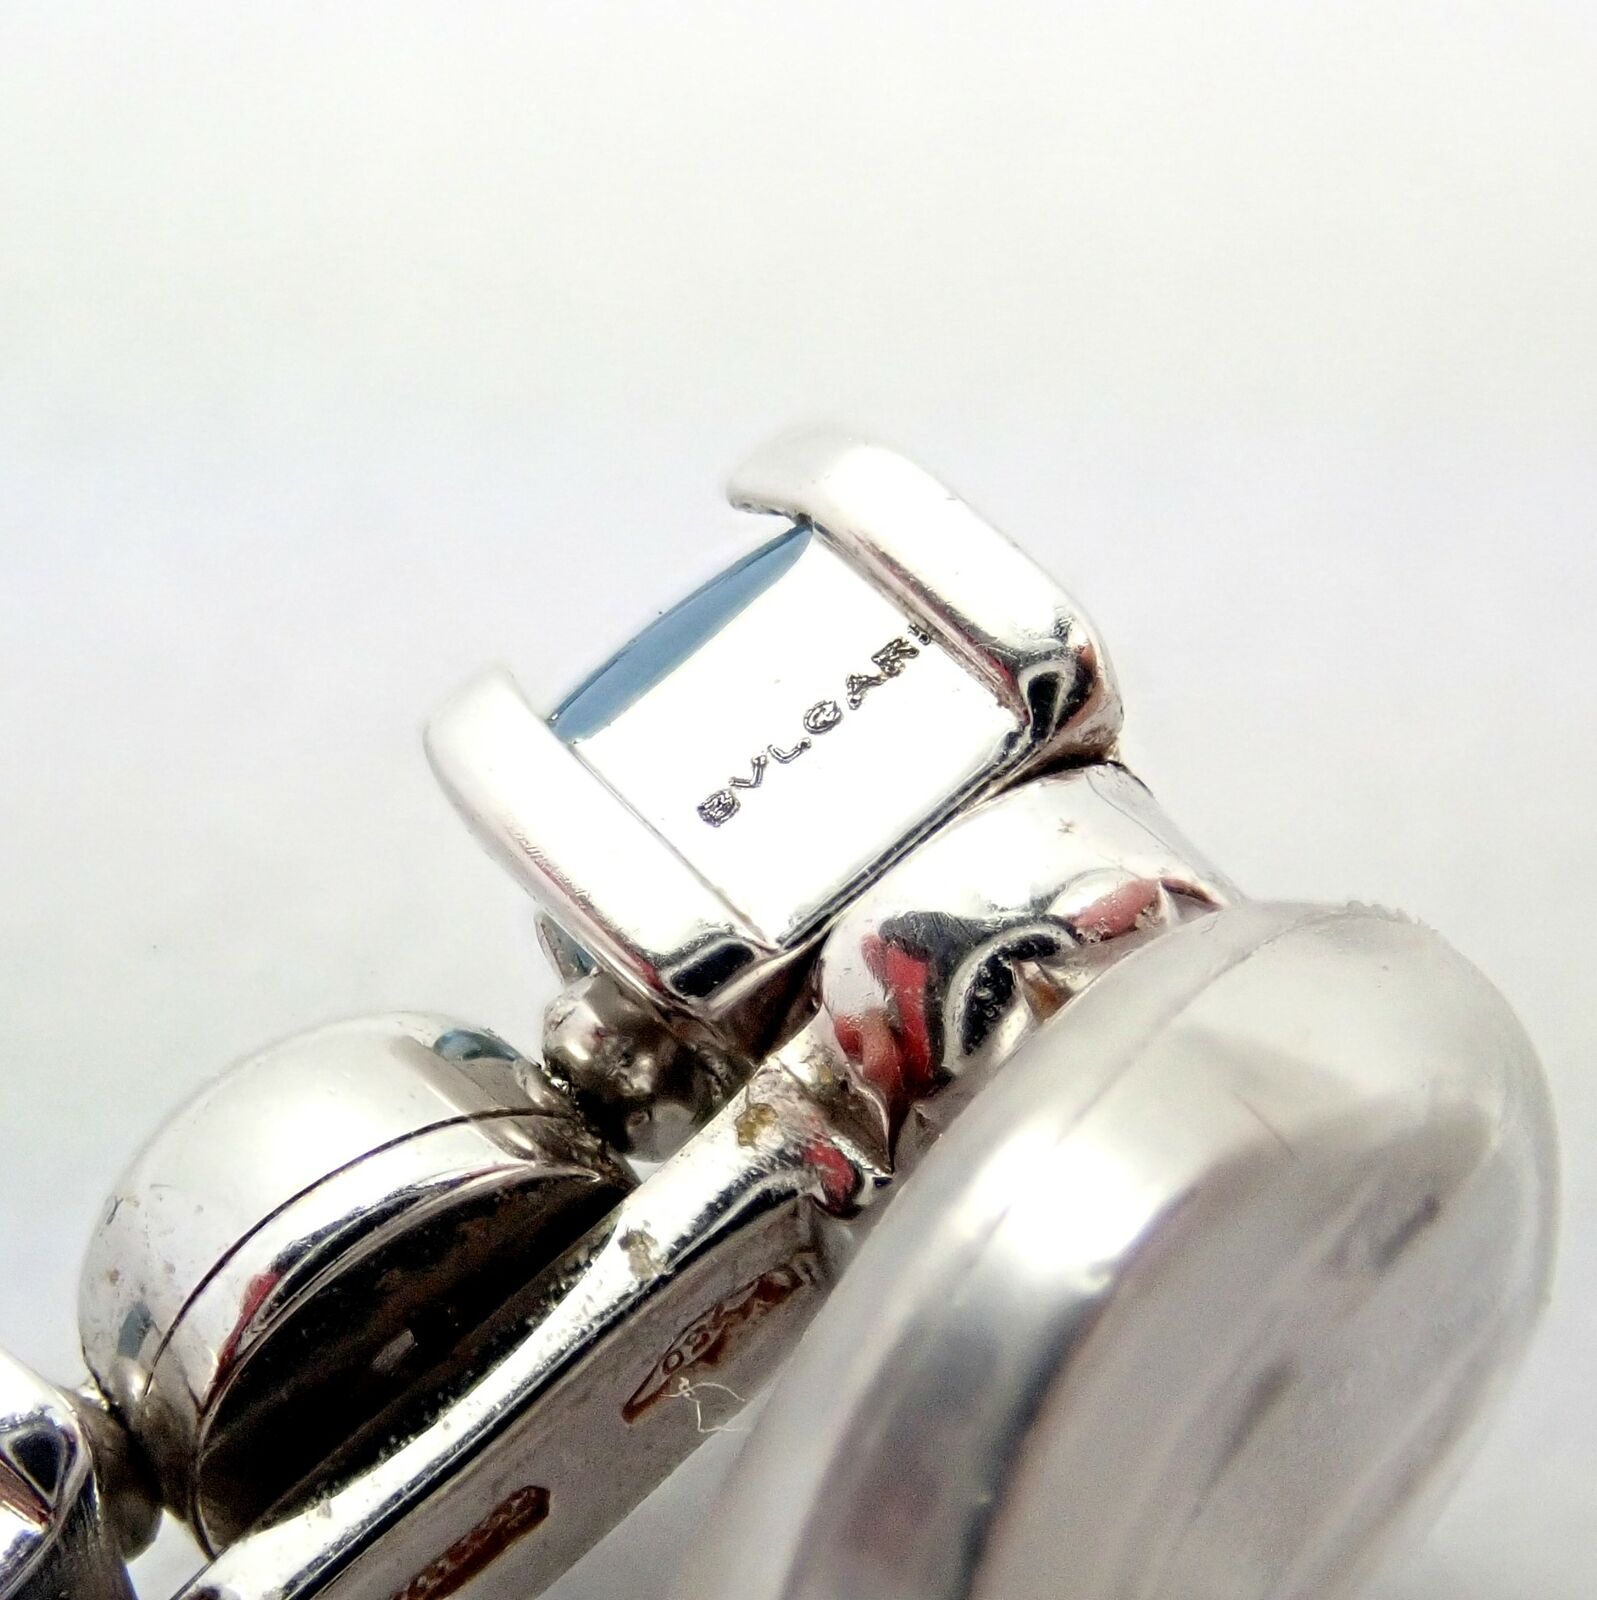 Bvlgari Jewelry & Watches:Fine Jewelry:Earrings Bulgari Bvlgari Lucea 18k White Gold Diamond Aquamarine Long Drop Earrings